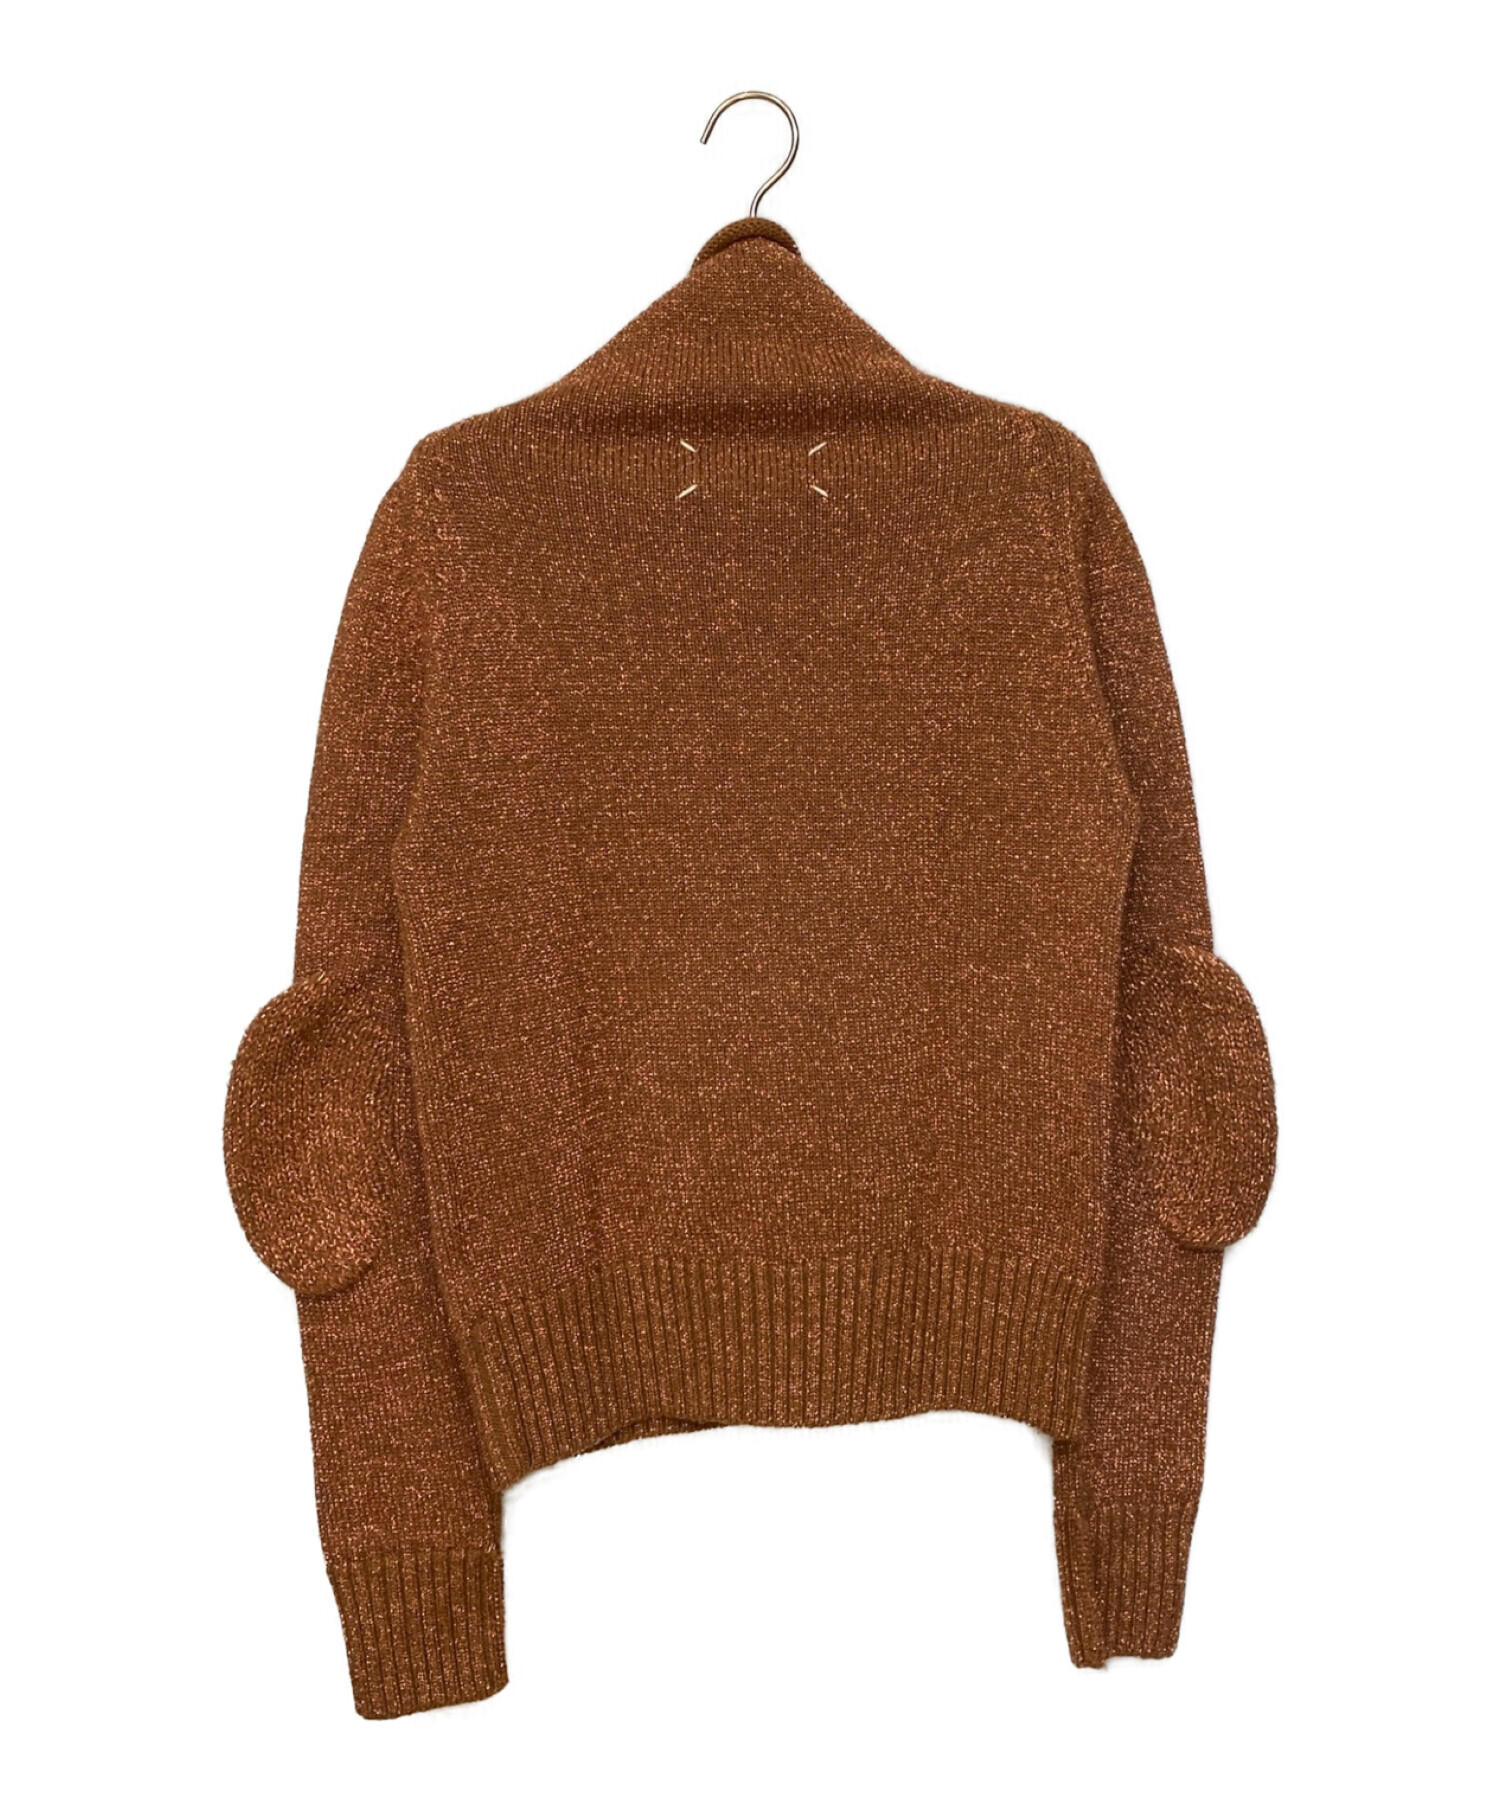 98ss archive JILSANDER knit cardigan - トップス